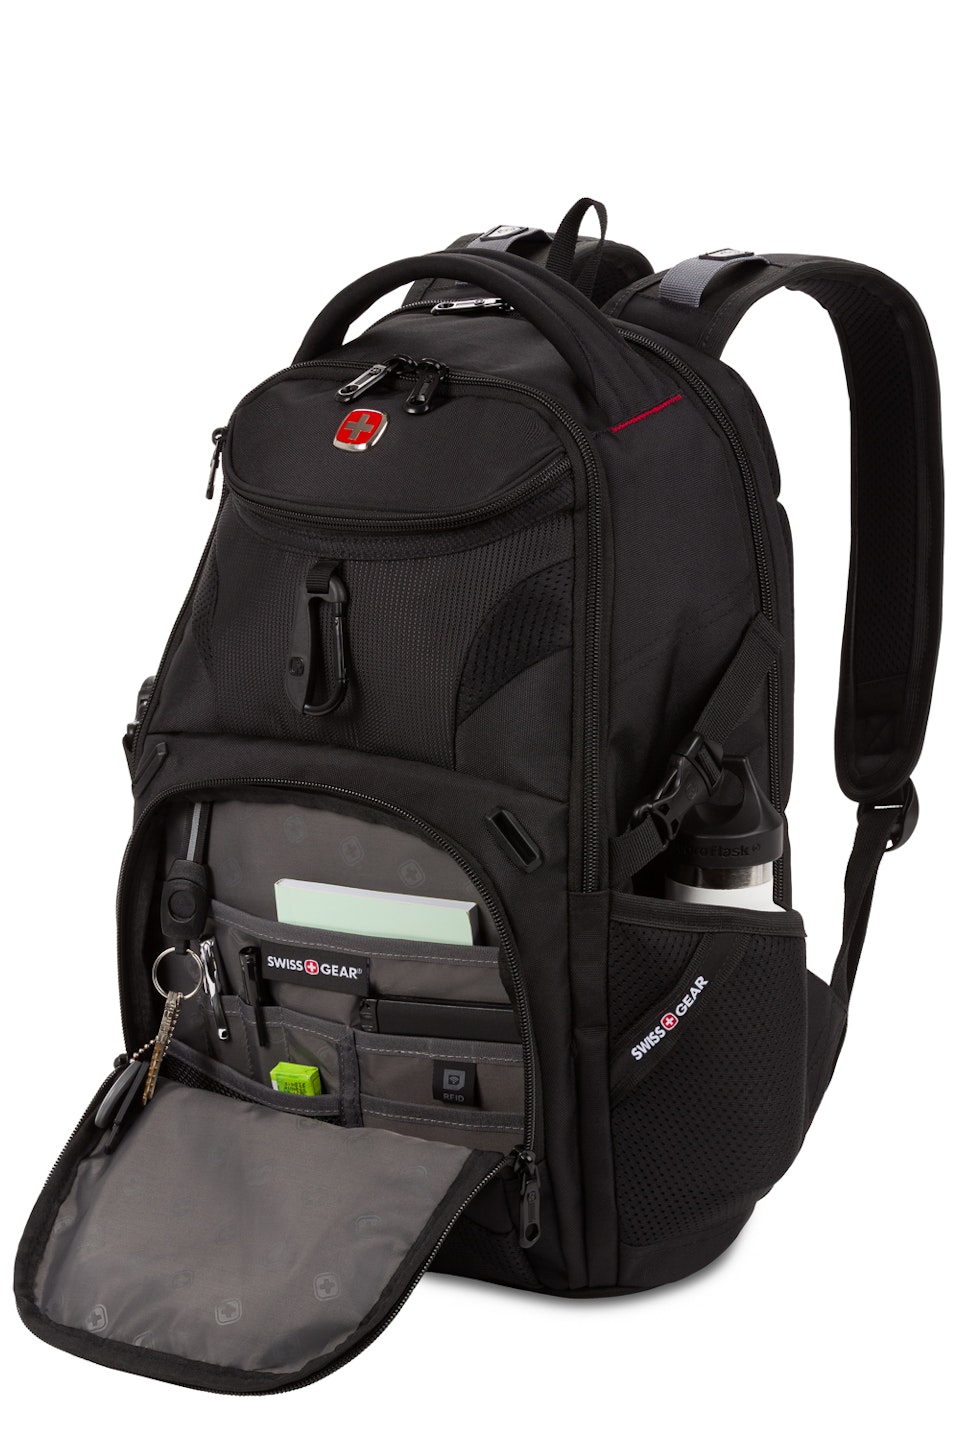 swissgear 18l core travel backpack